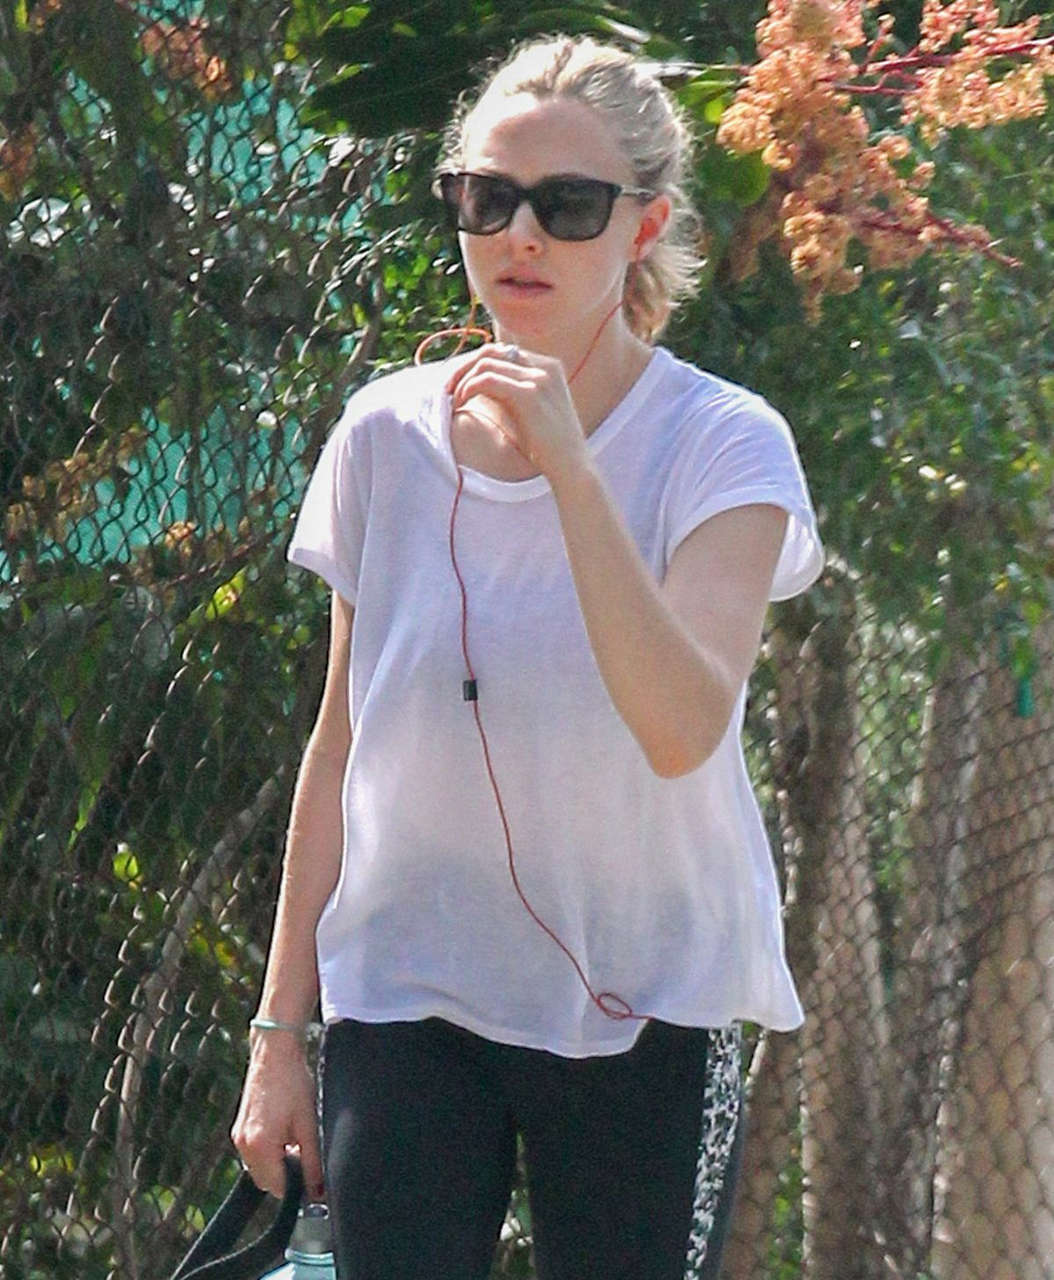 Amanda Seyfried Walks Her Dog Out Los Angeles